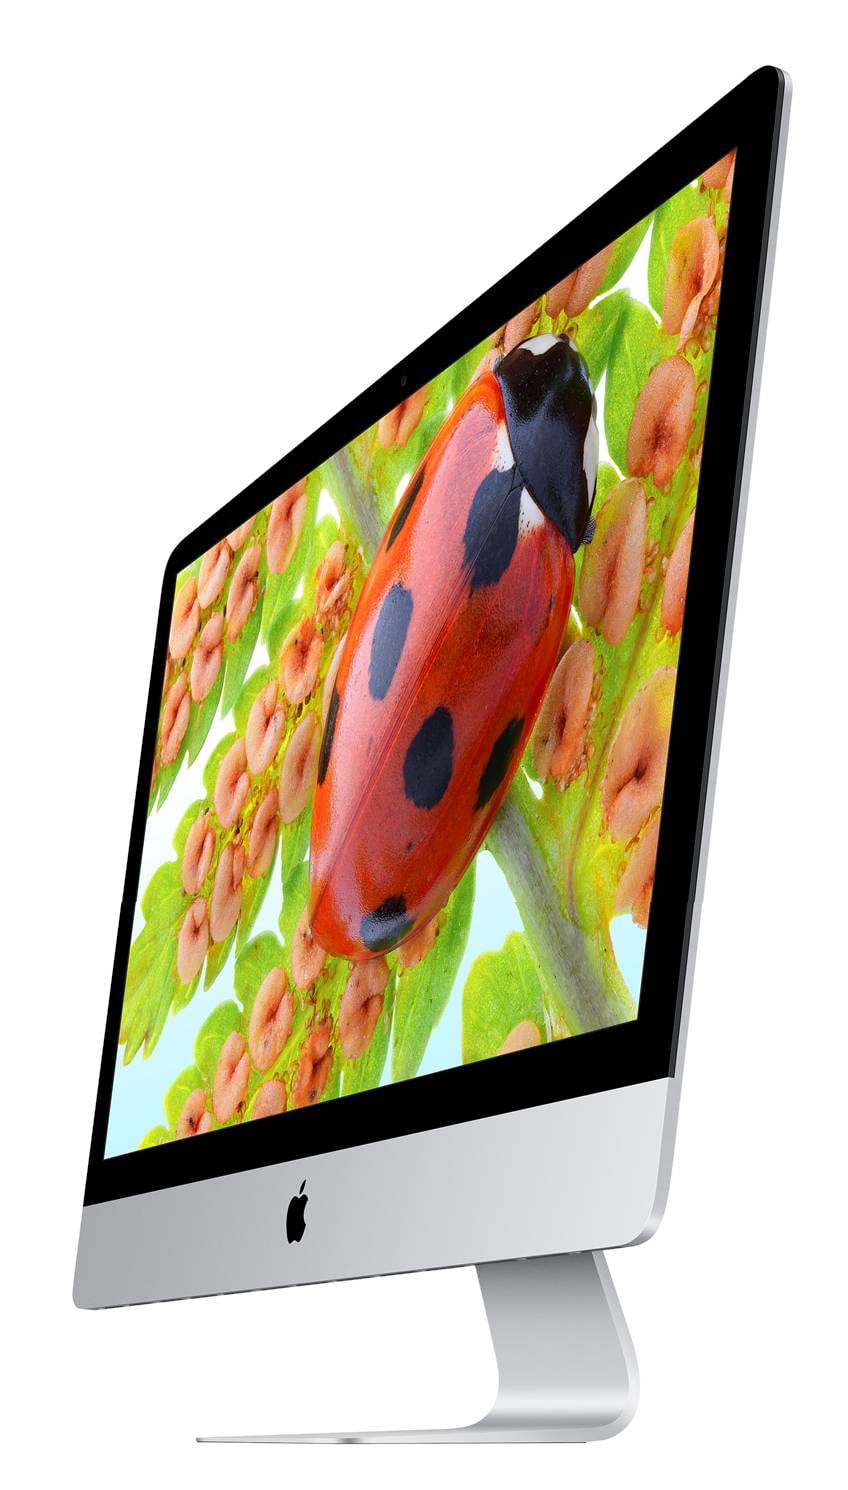 Restored Apple Desktop Computer iMac 21.5-inch (Aluminum) 2.8GHZ